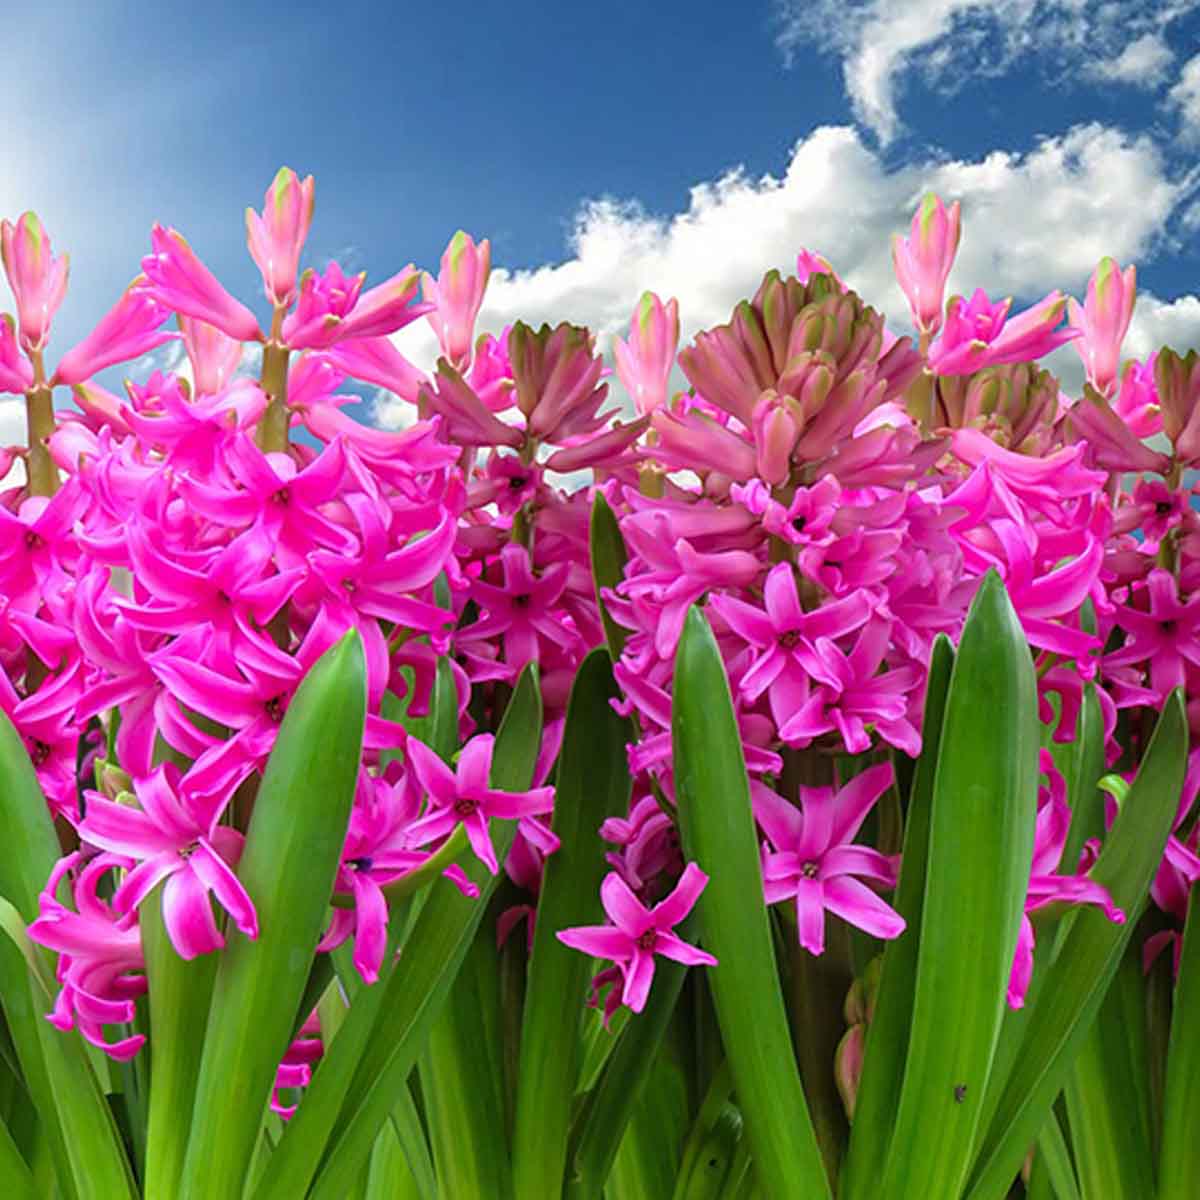 Magenta colored hyacinths